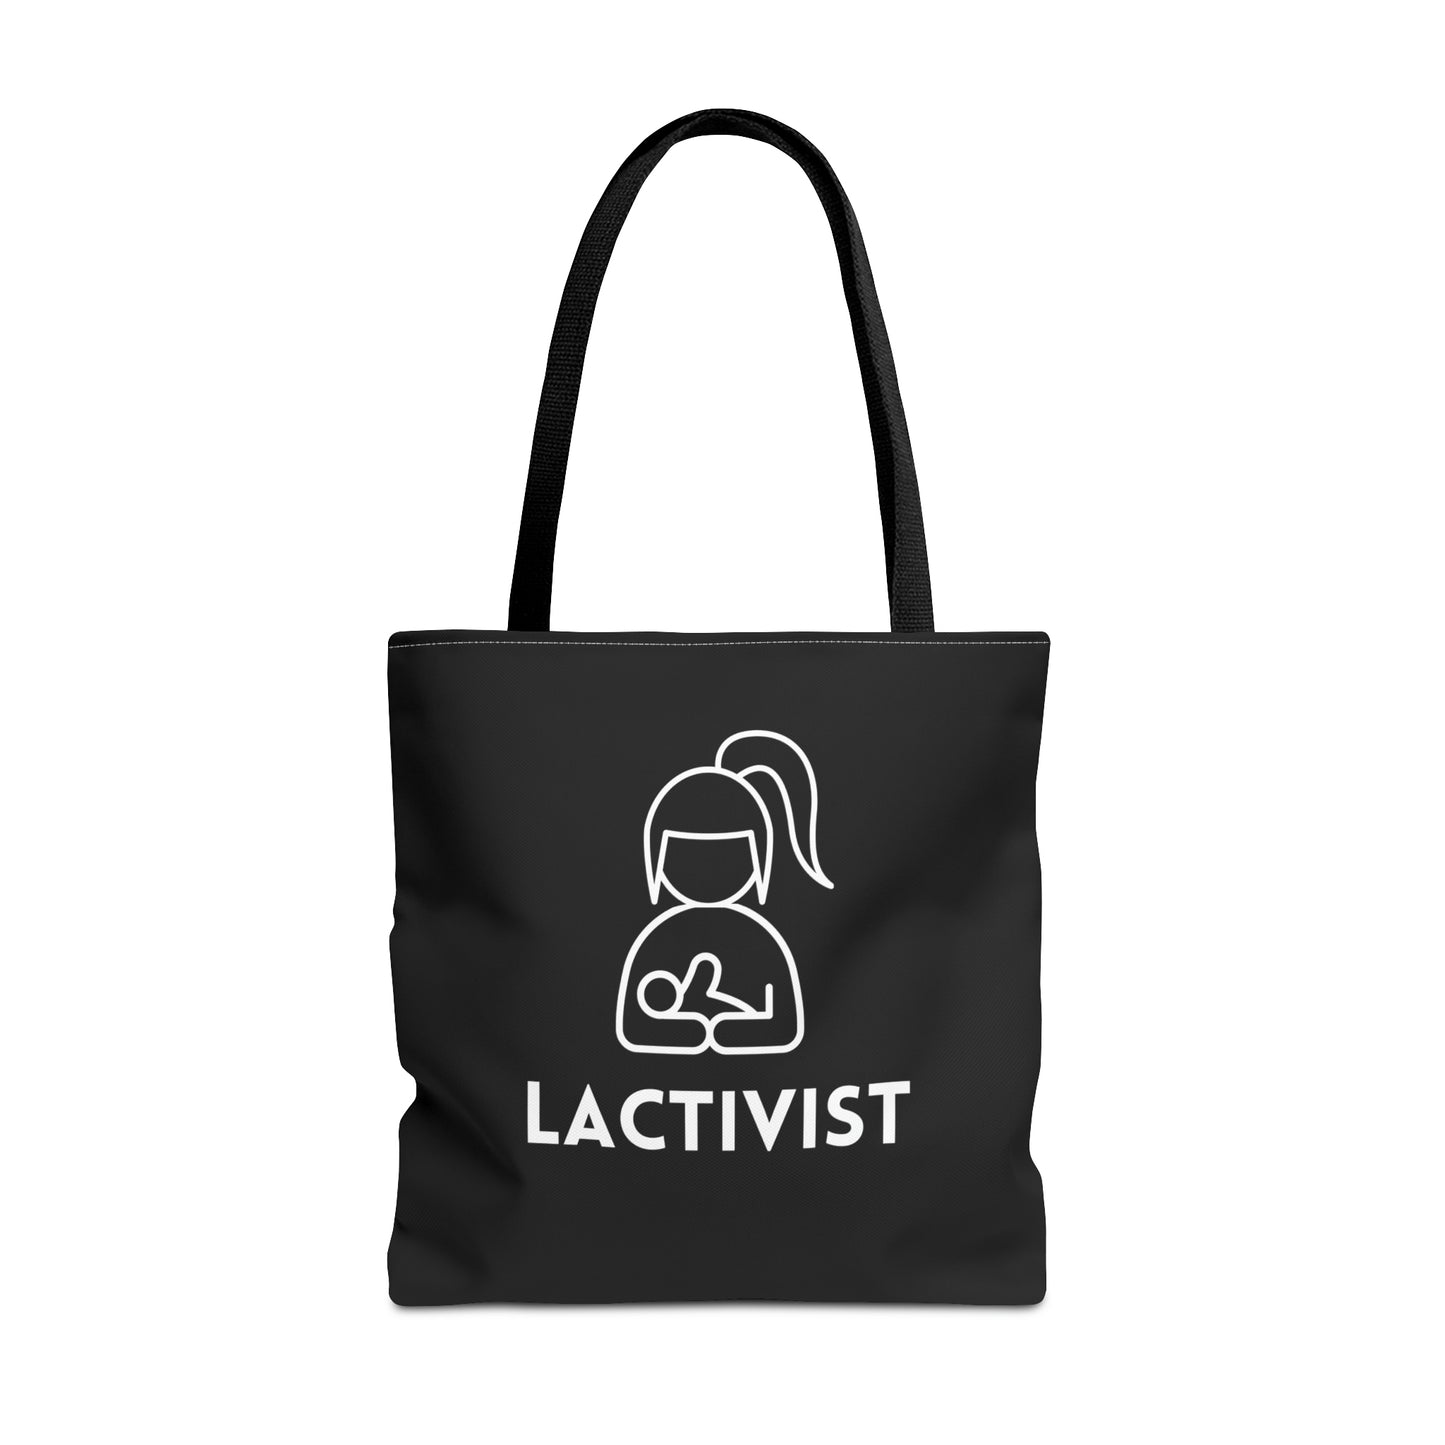 "Lactivist" Breastfeeding Tote Bag